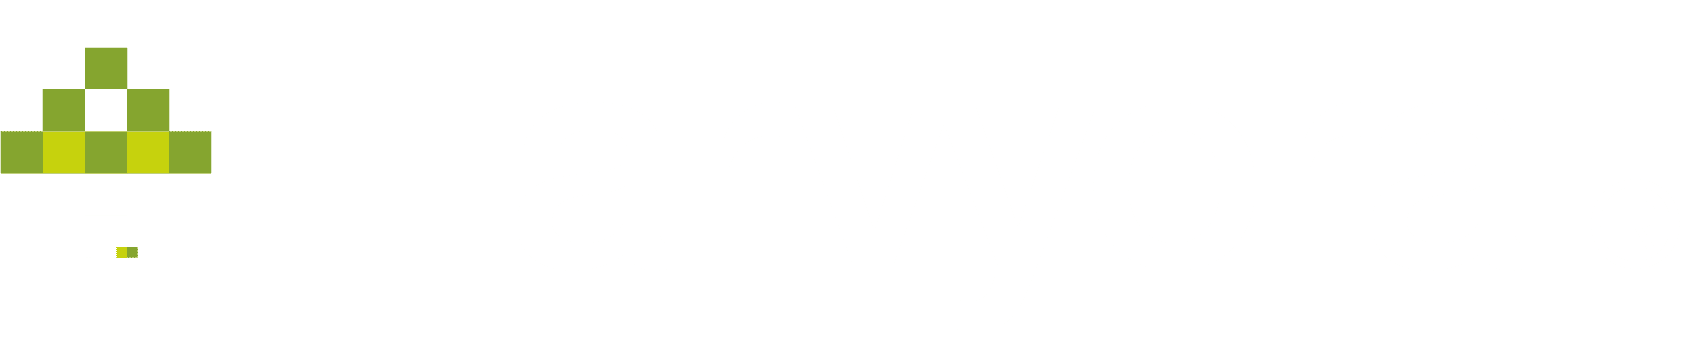 Harvyora Logo